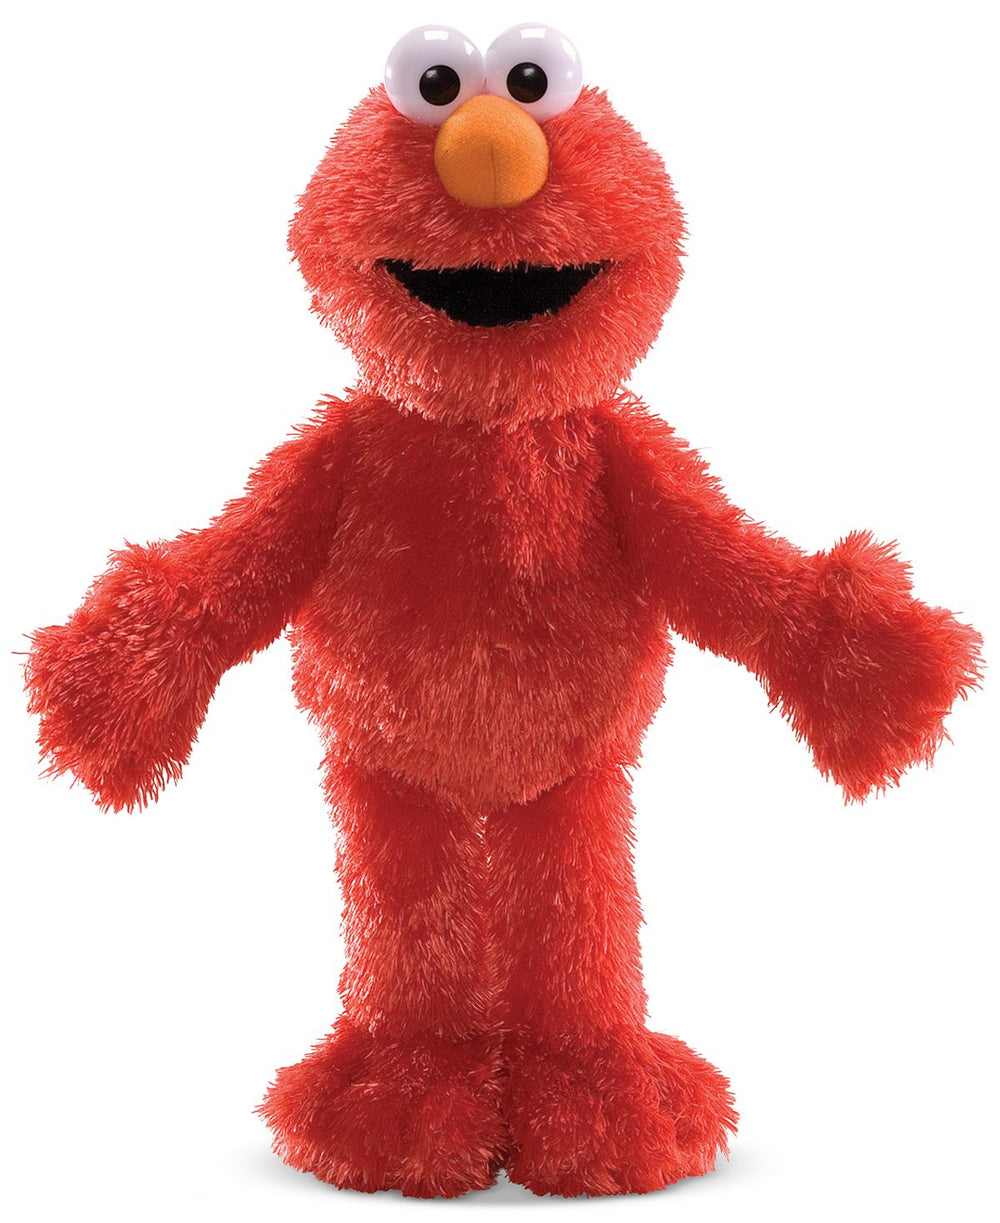 Gund Sesame Street 12 inch Plush Elmo Doll